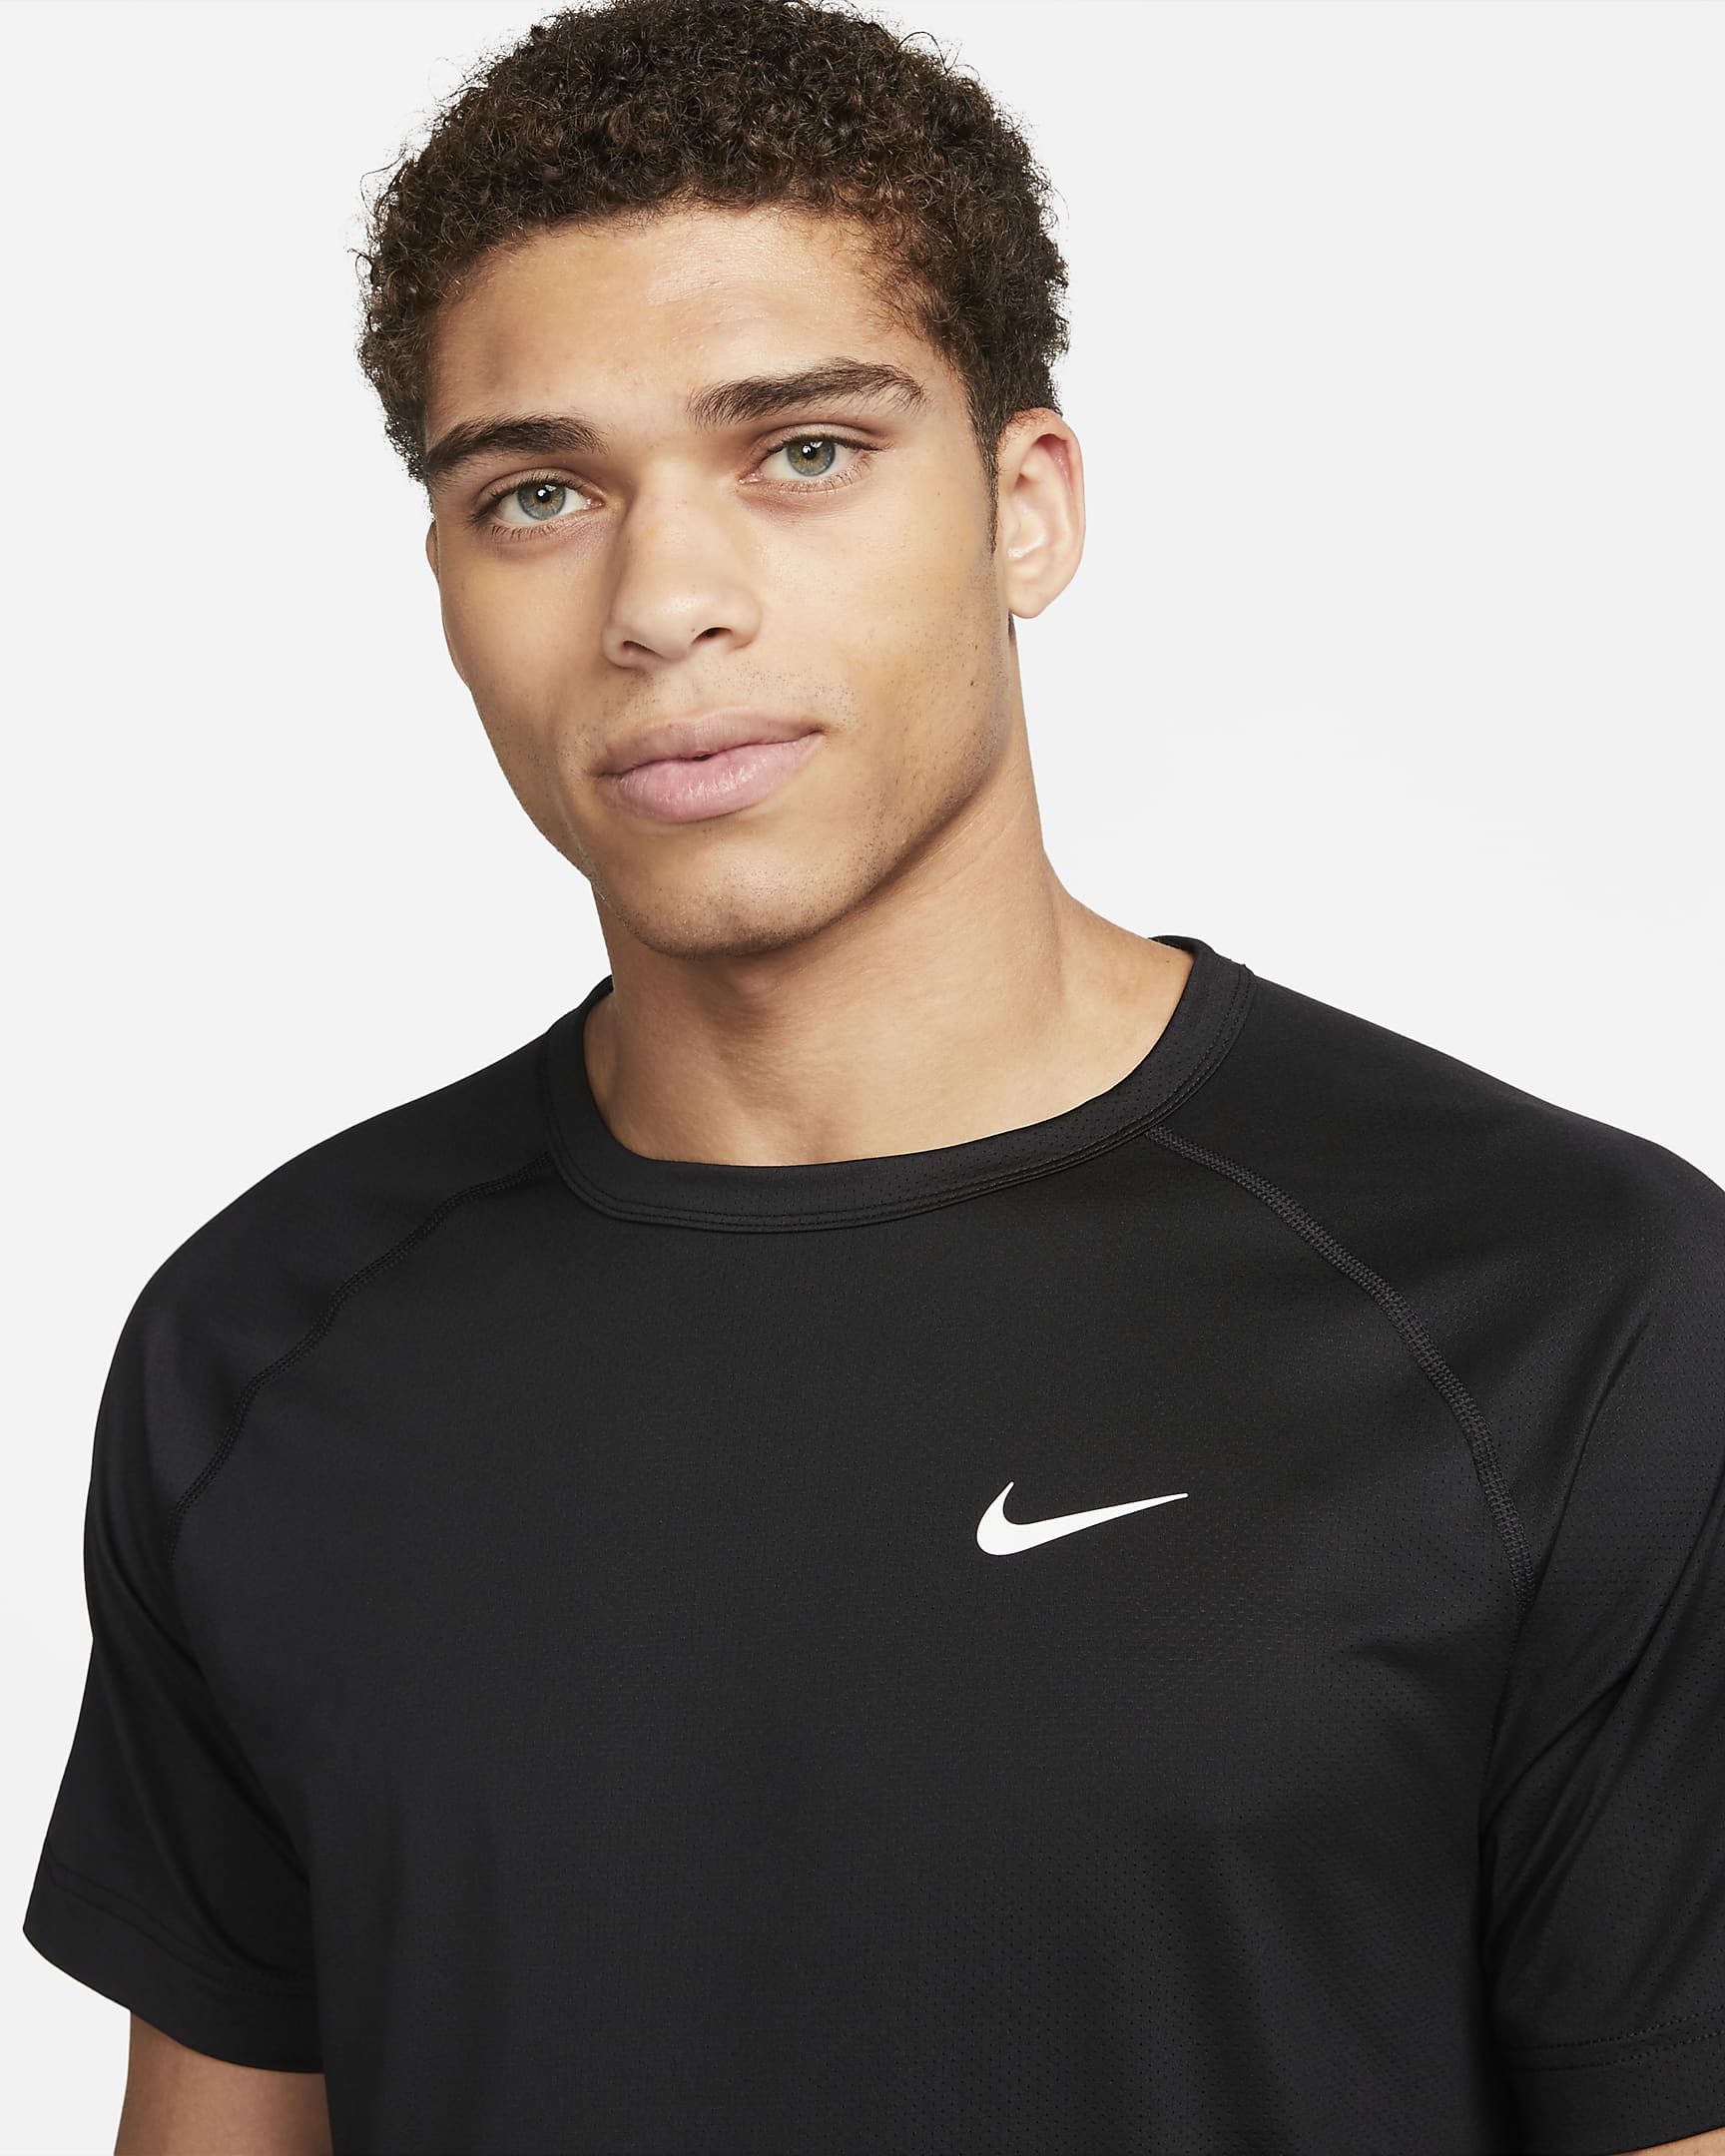 Nike Ready Men's Dri-FIT Short-Sleeve Fitness Top. Nike.com